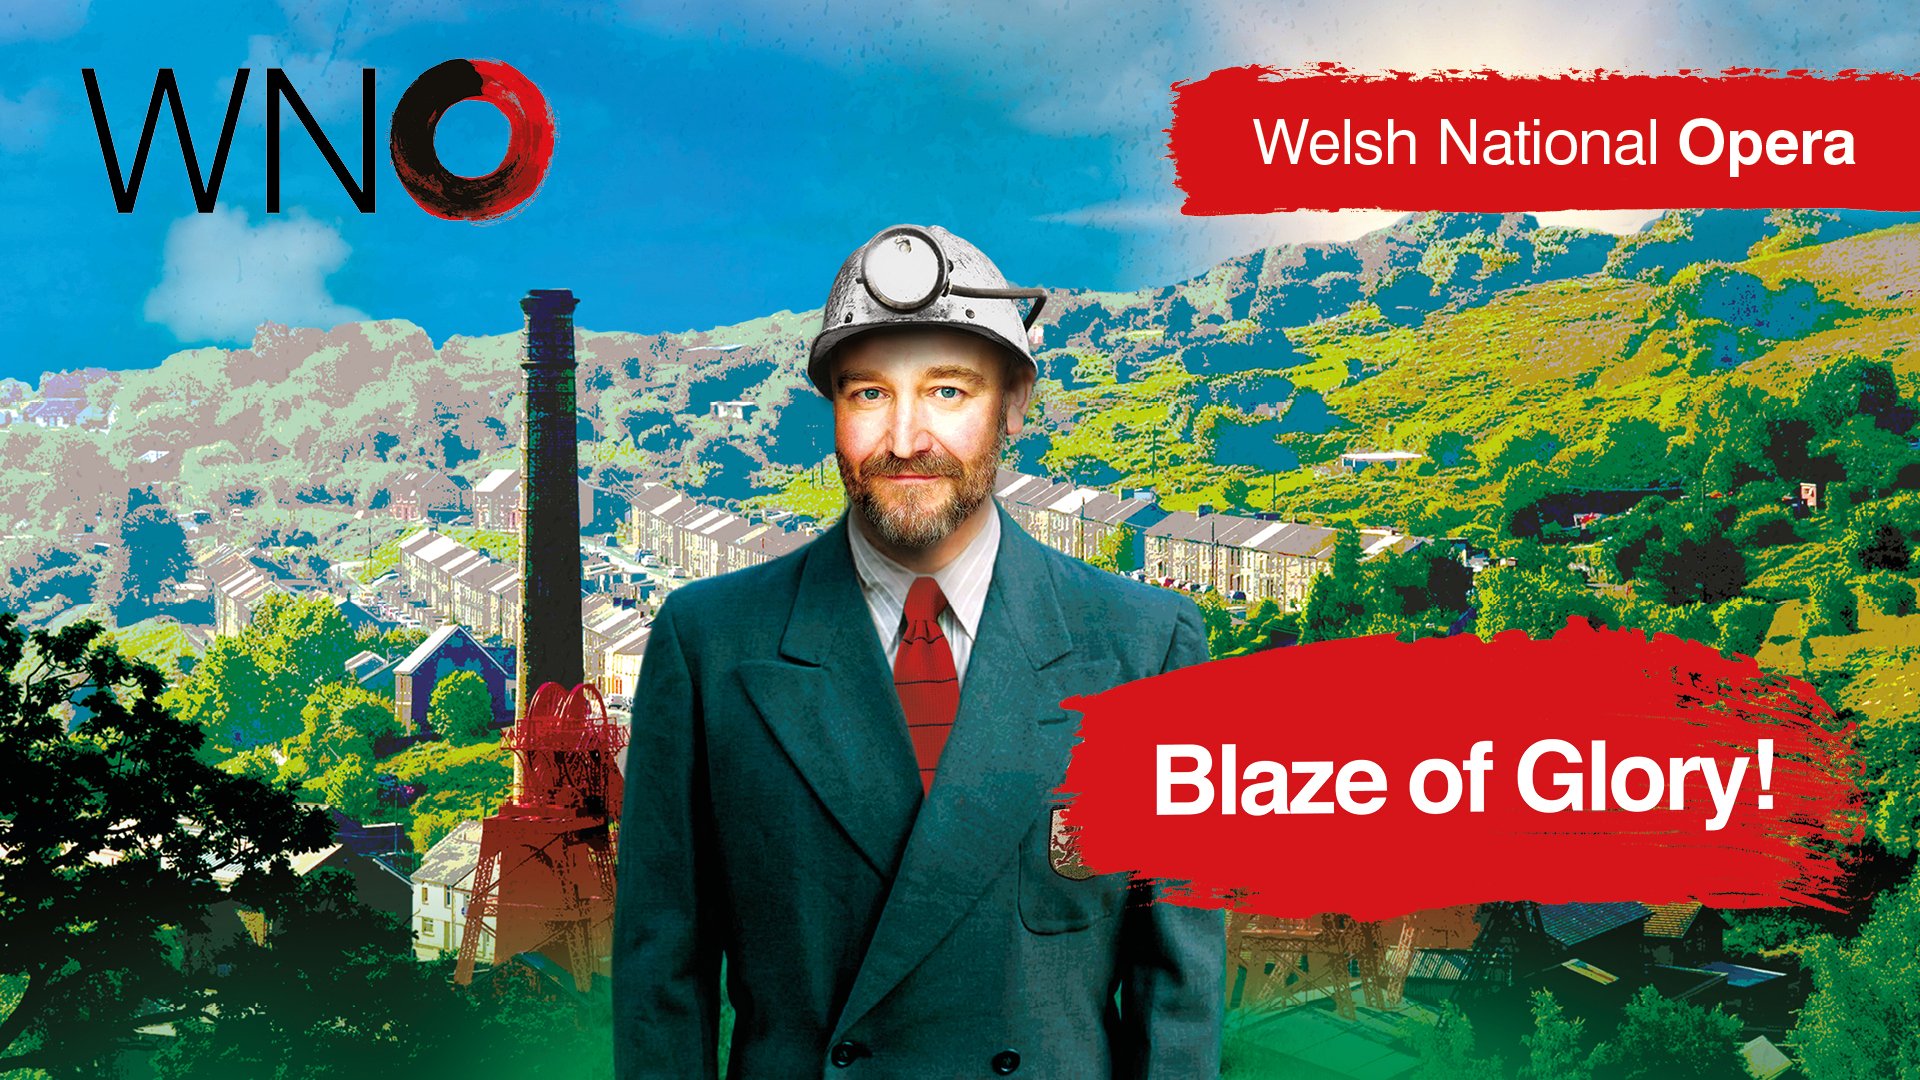 Welsh National Opera – Blaze of Glory!